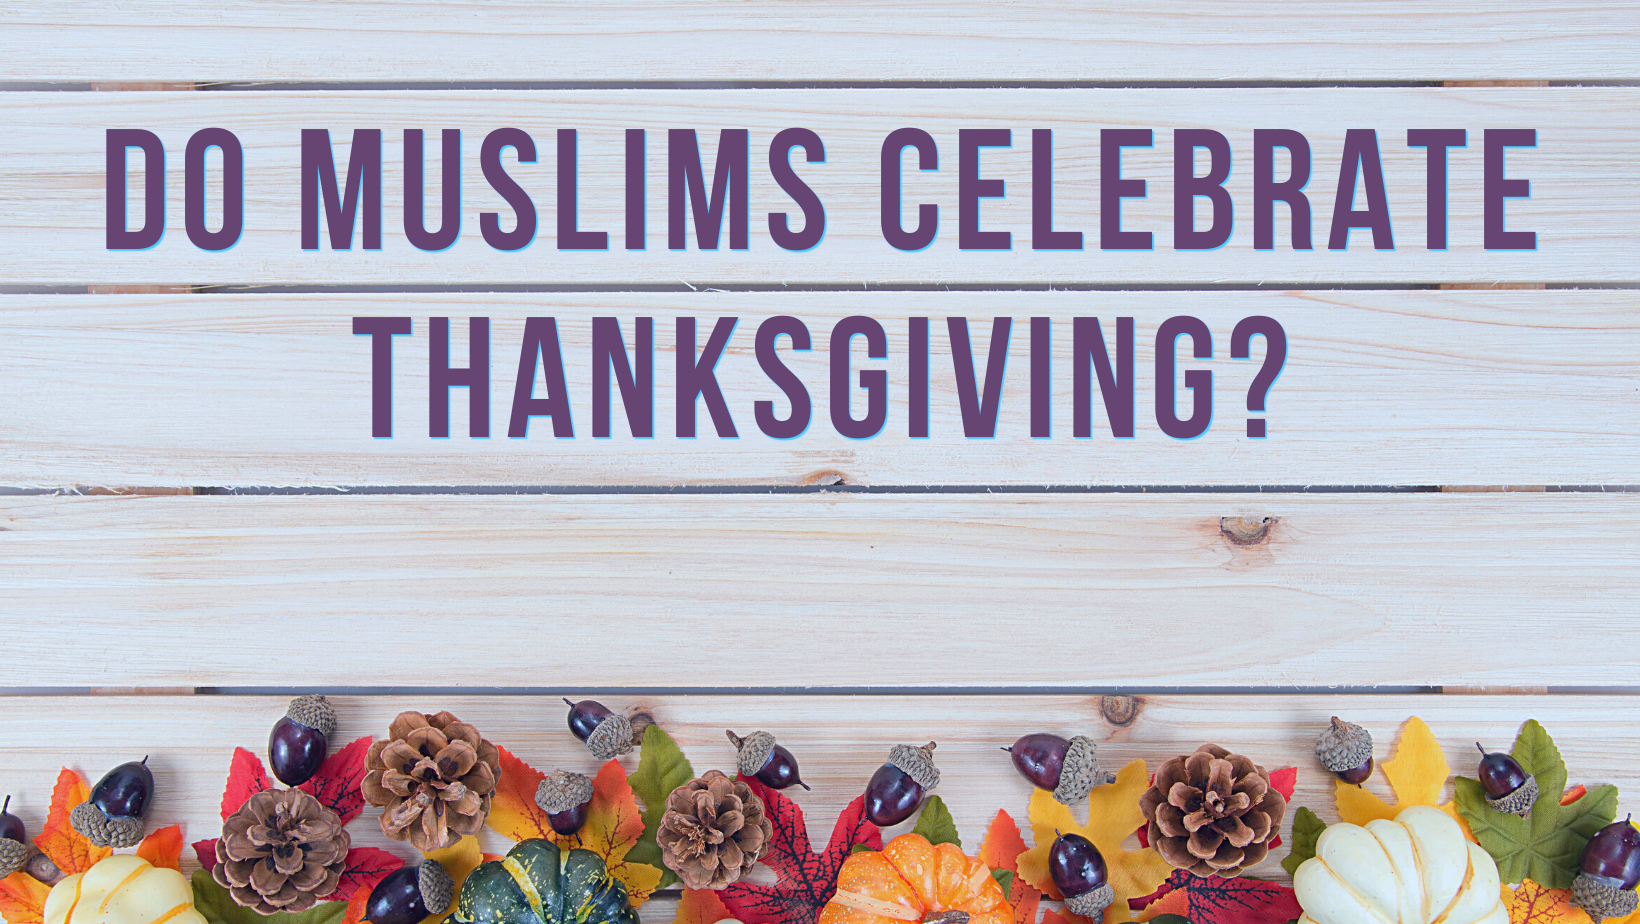 Do Muslims celebrate Thanksgiving?